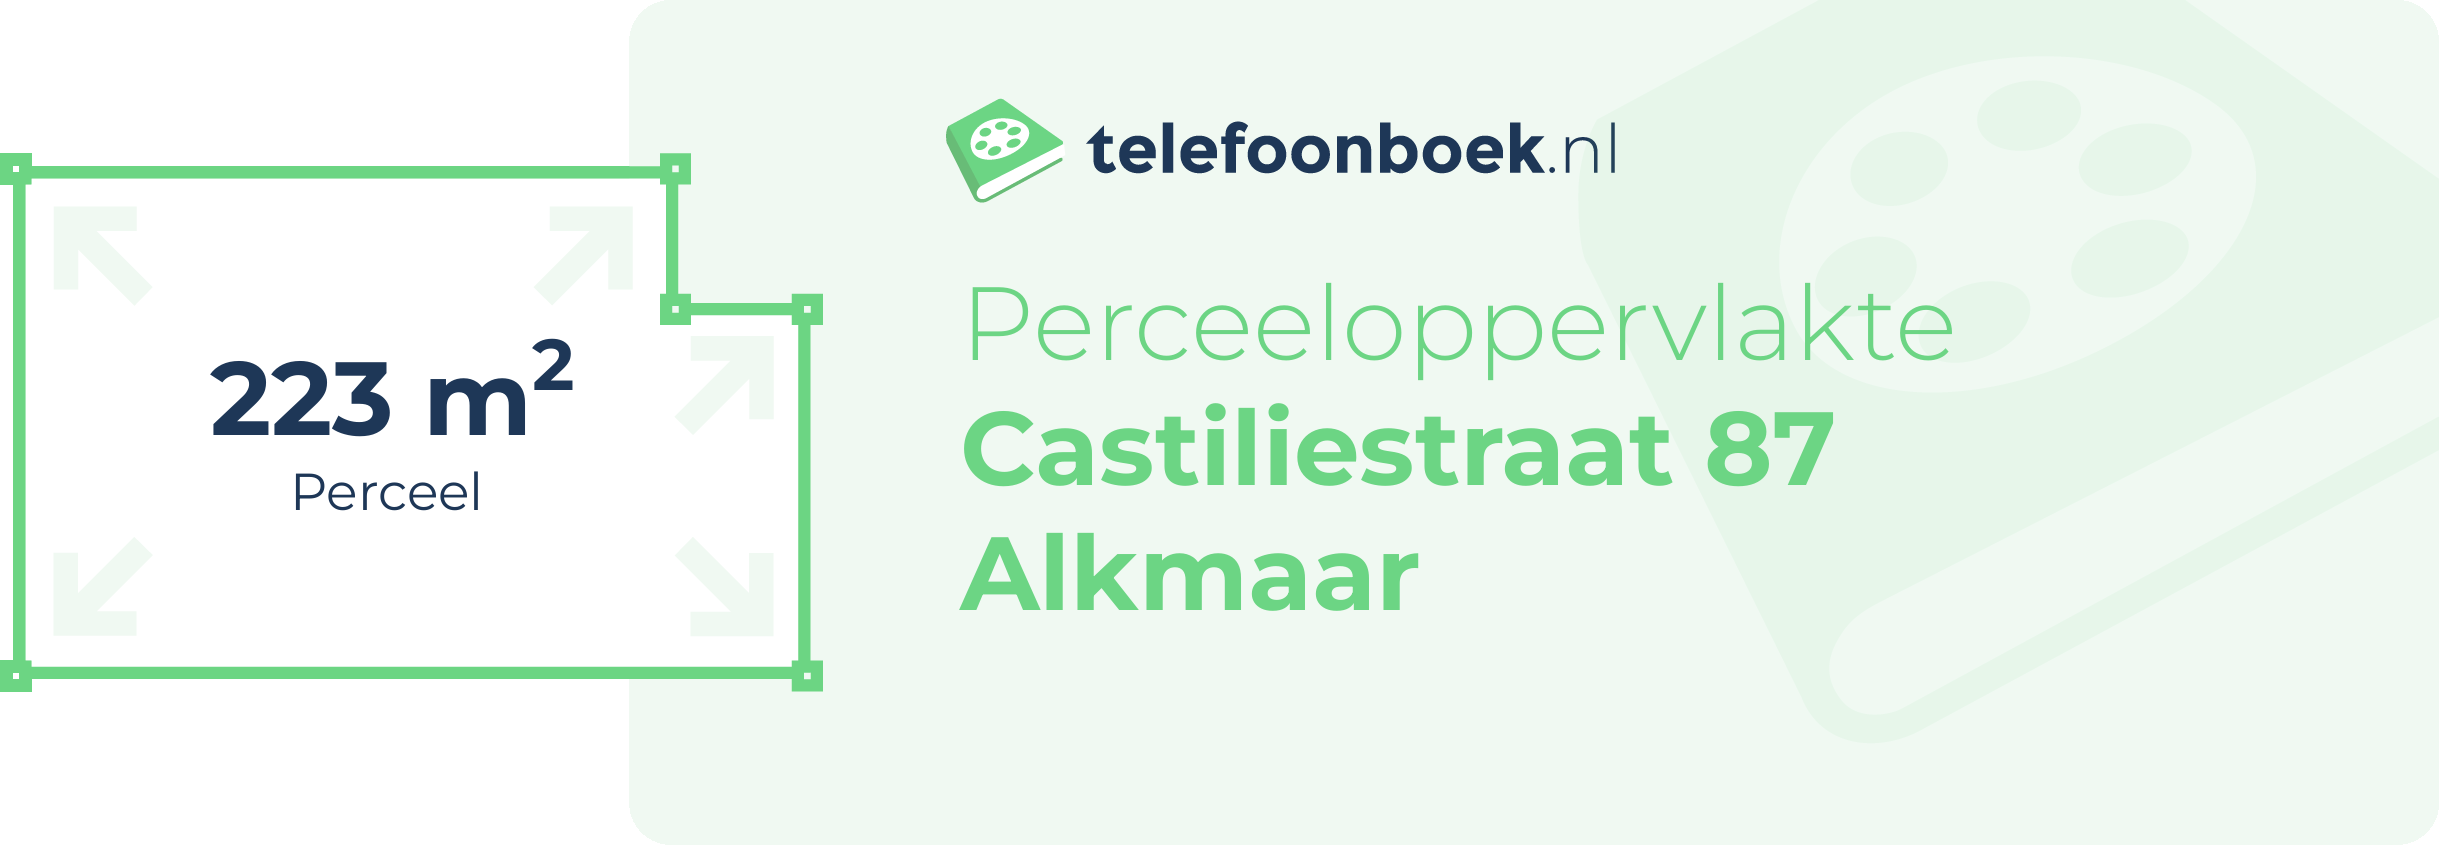 Perceeloppervlakte Castiliestraat 87 Alkmaar